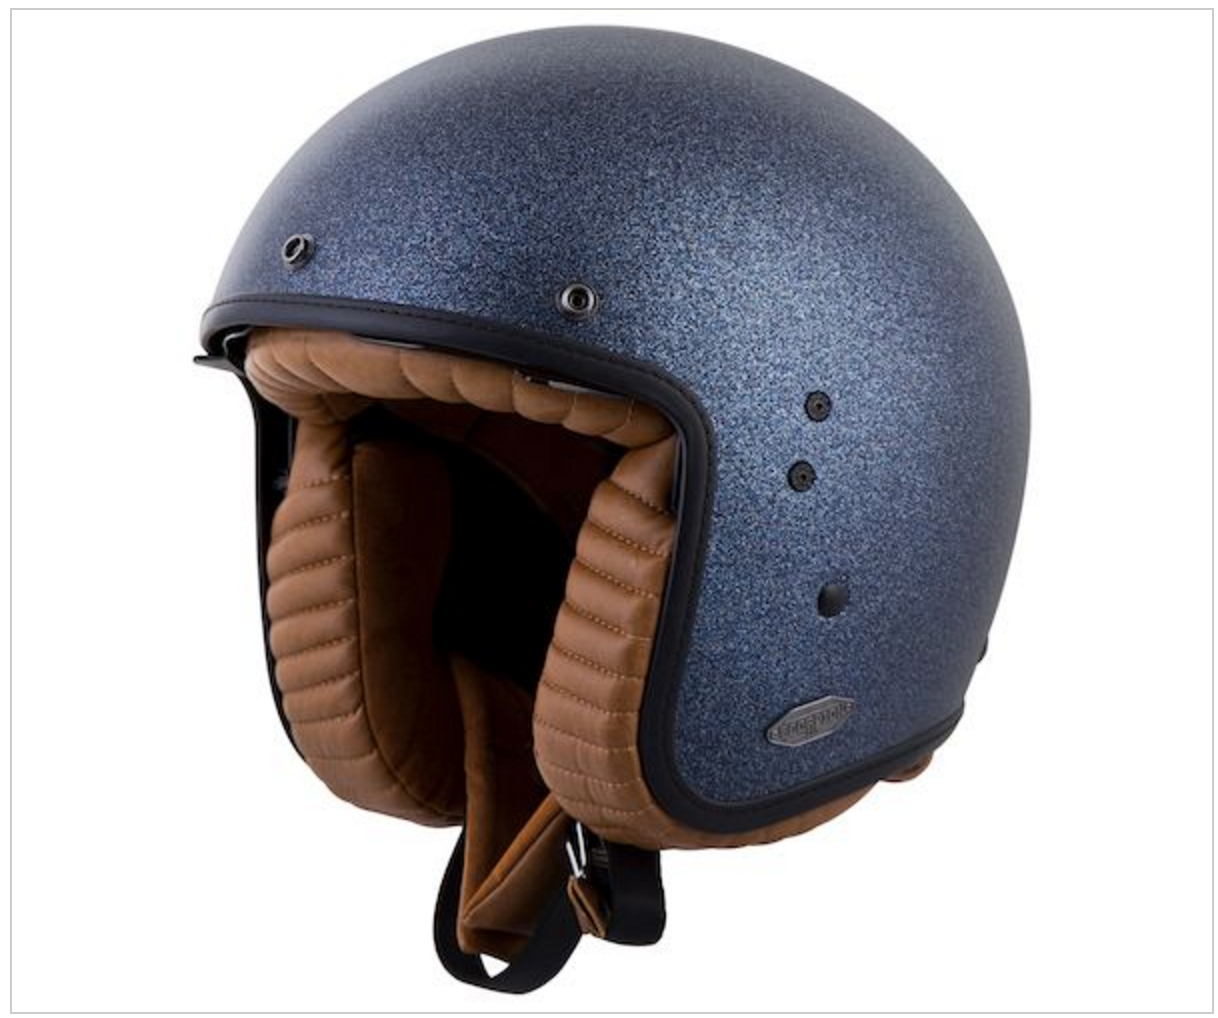 10 Best Cafe Racer Motorcycle Helmets